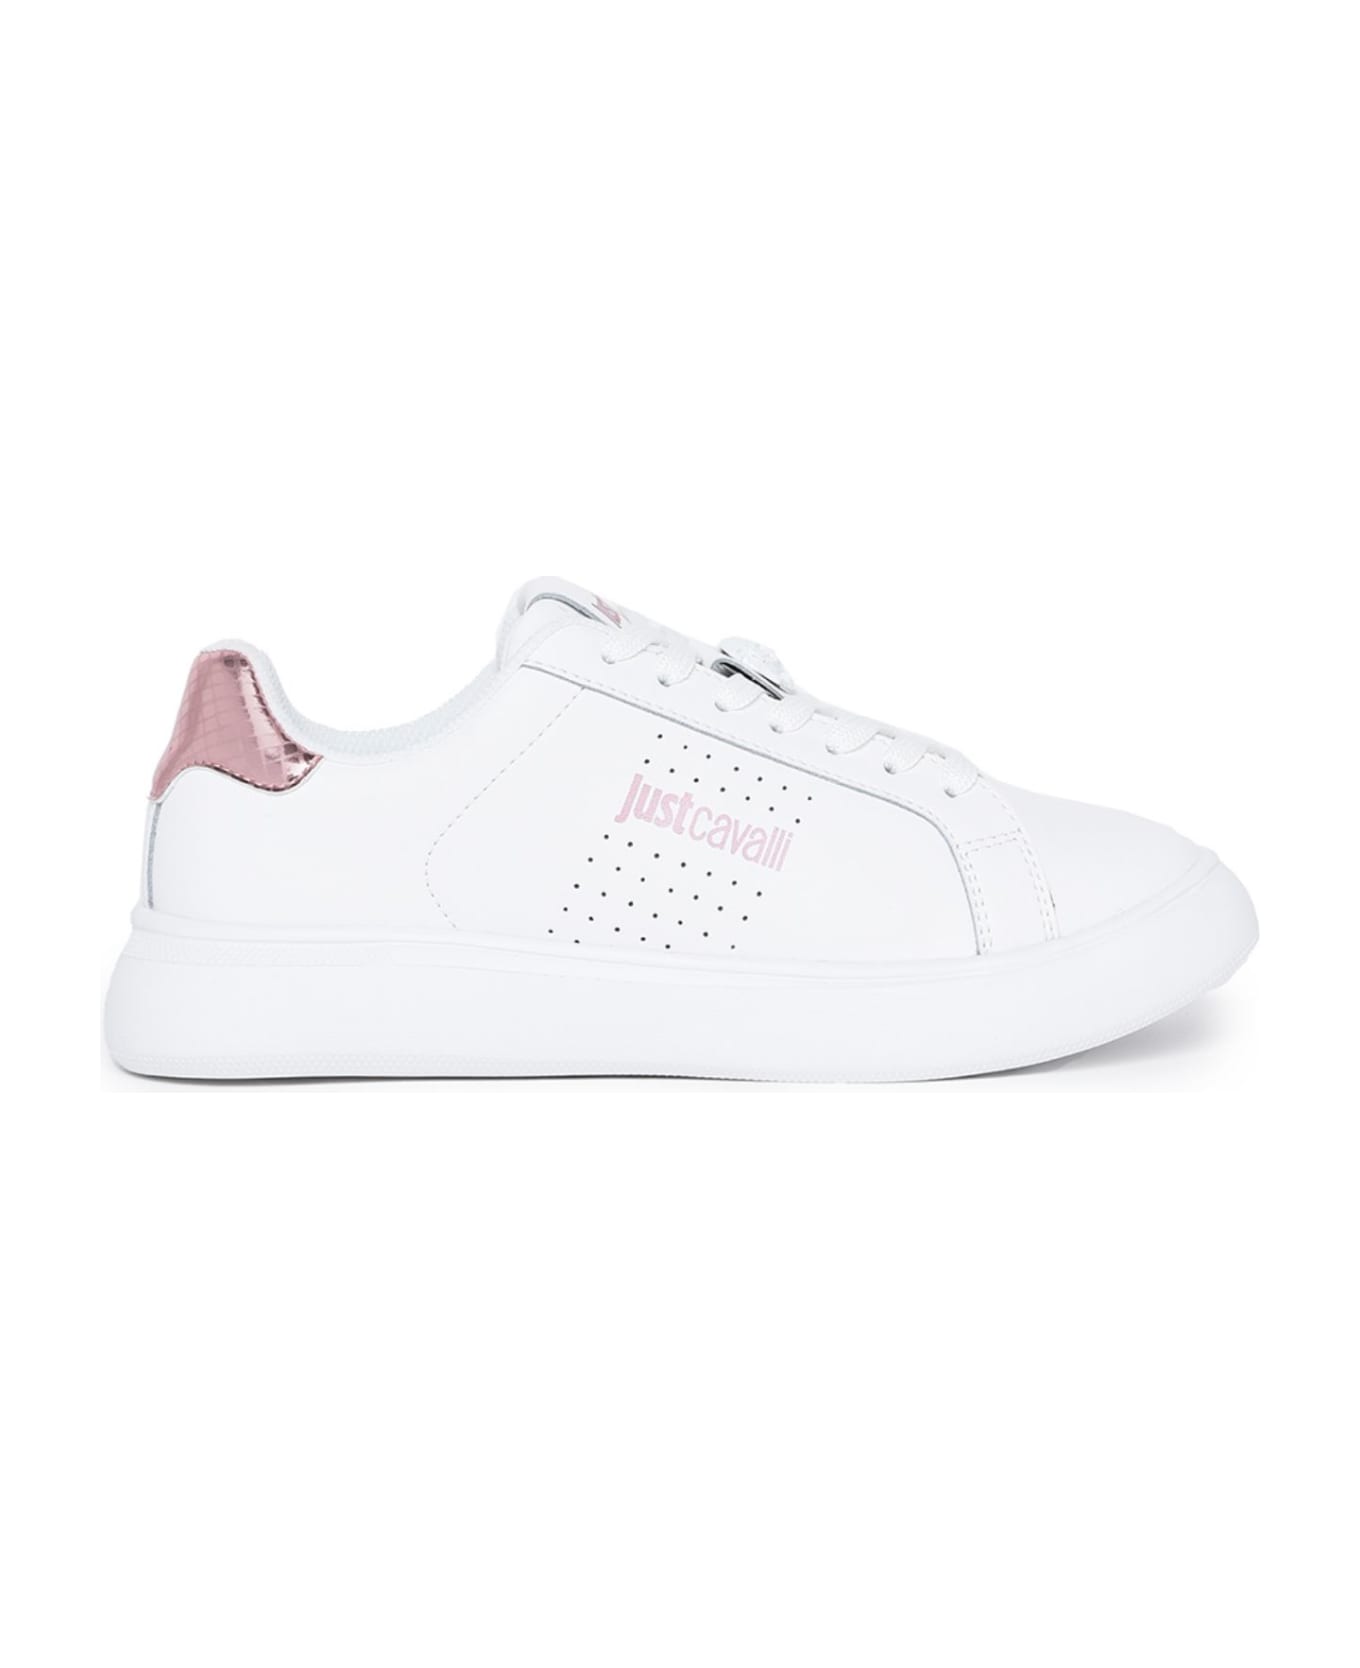 Just Cavalli Shoes - White スニーカー